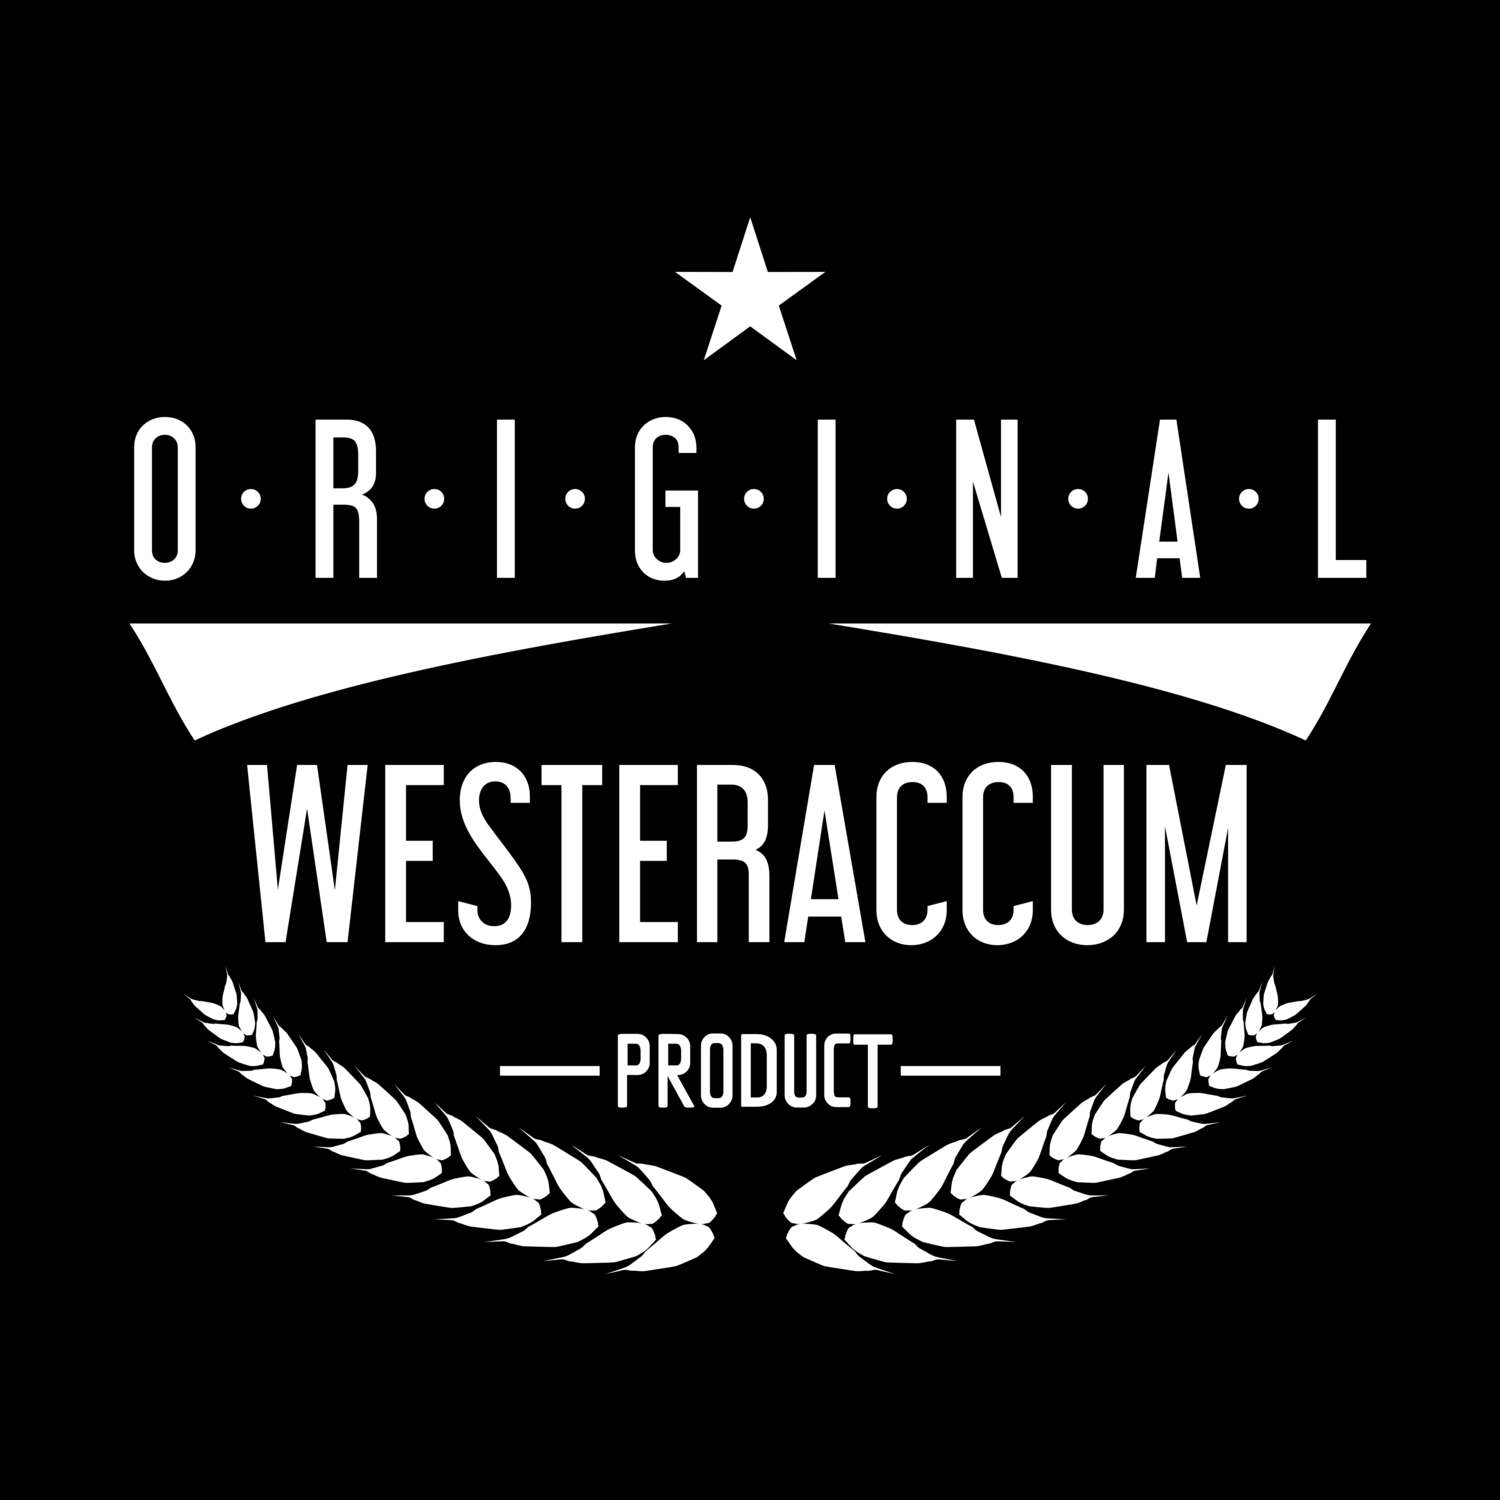 Westeraccum T-Shirt »Original Product«